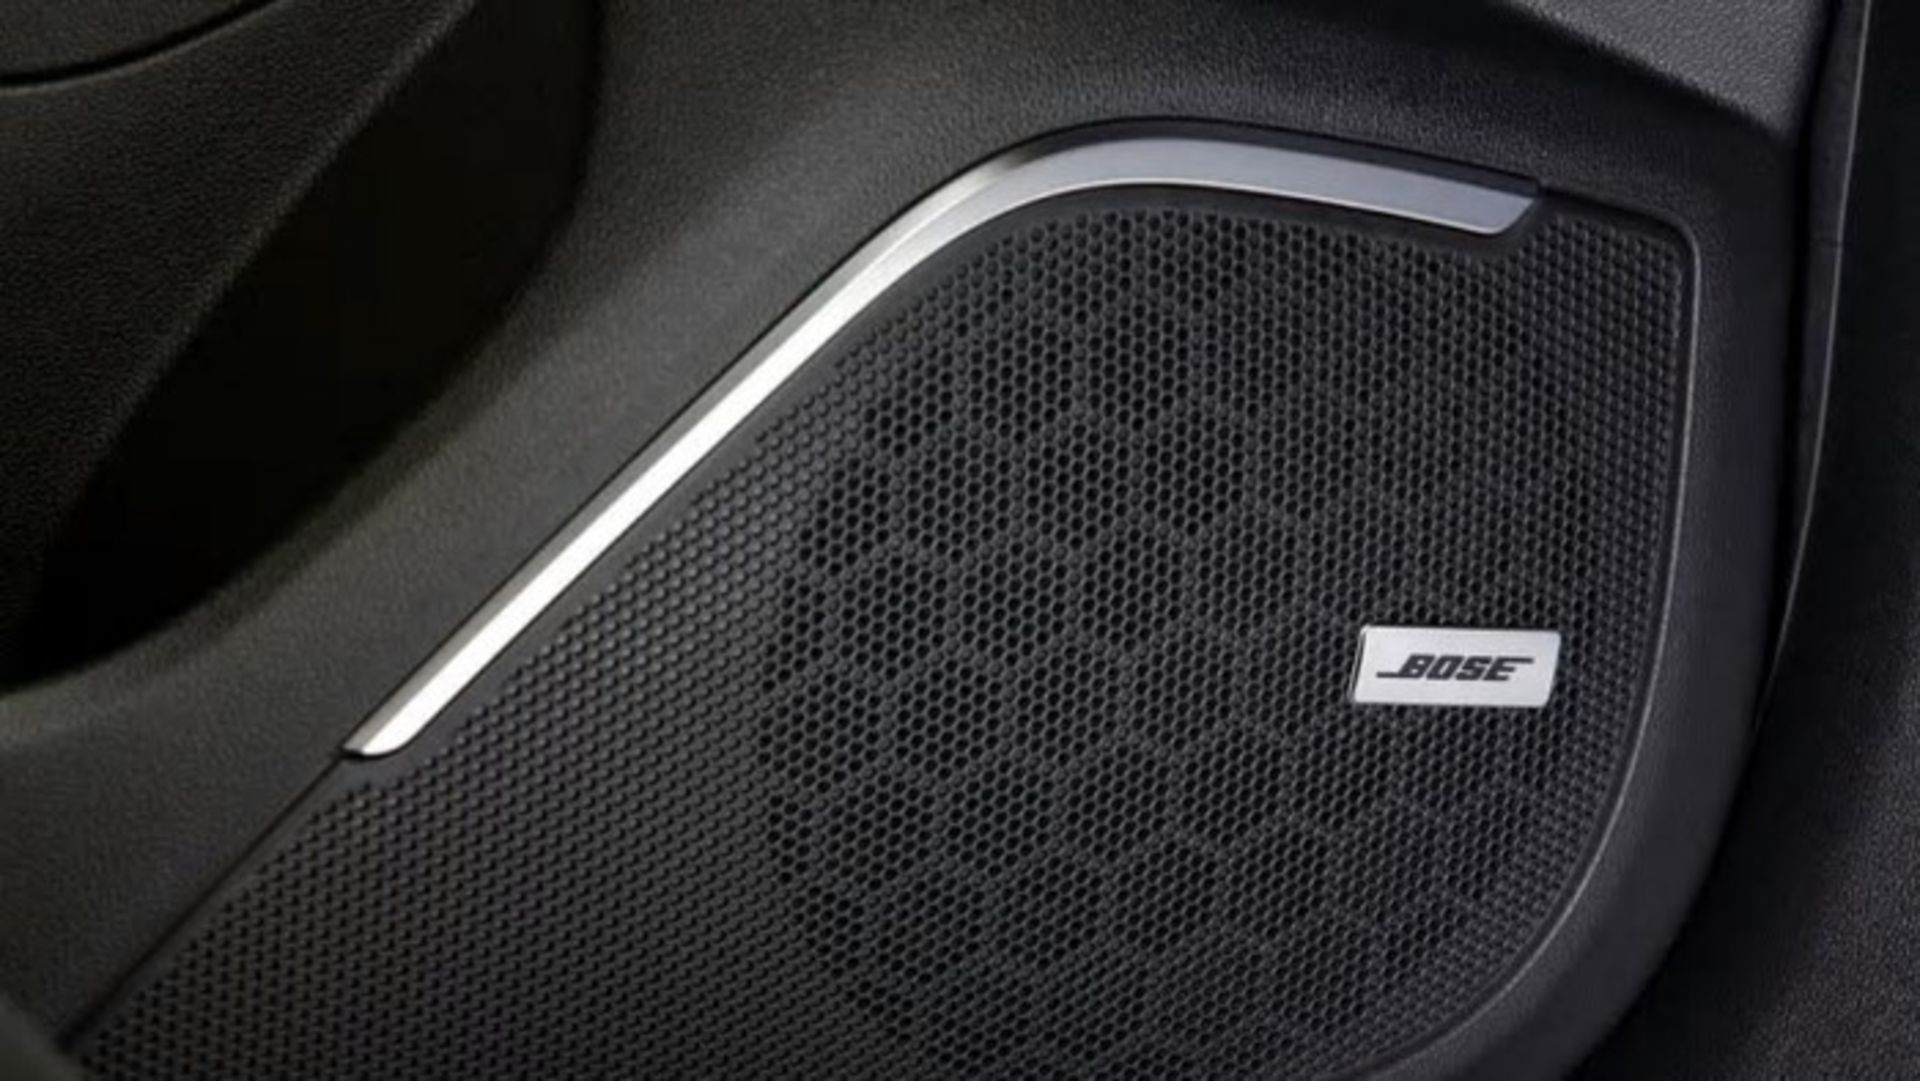 Hyundai advanced noise cancellation tech